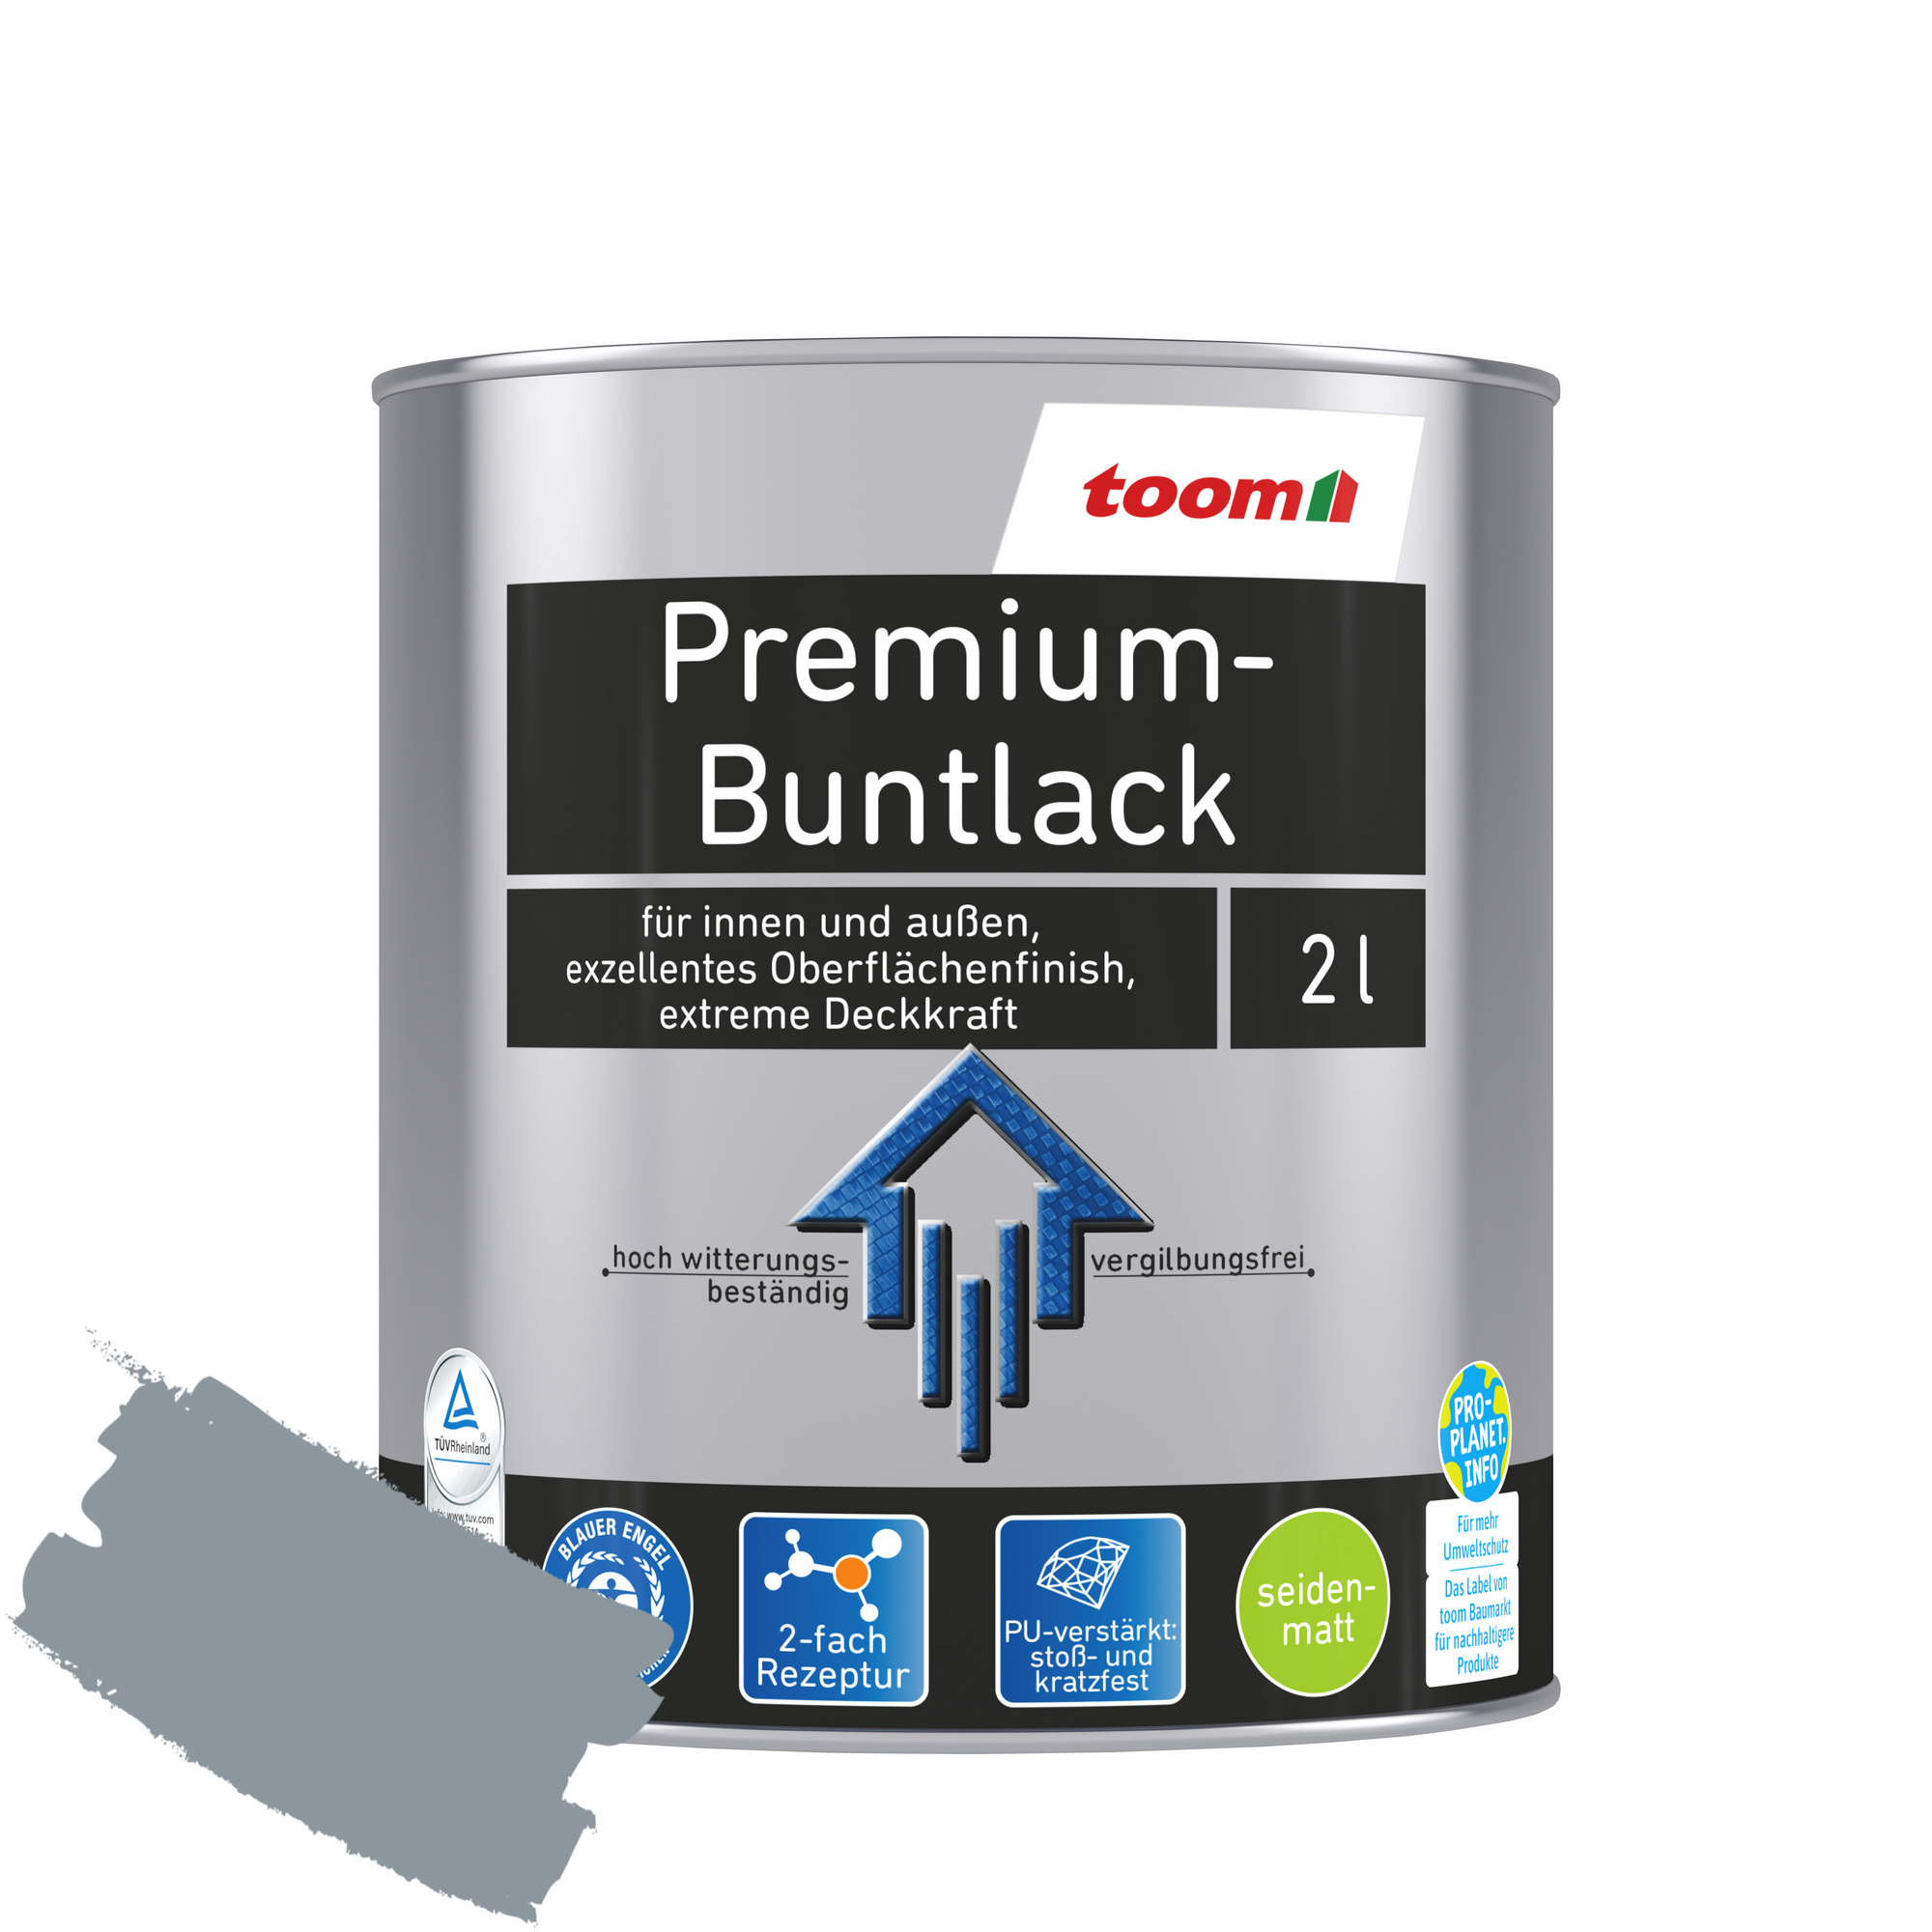 Premium-Buntlack silbergrau seidenmatt 2 l + product picture